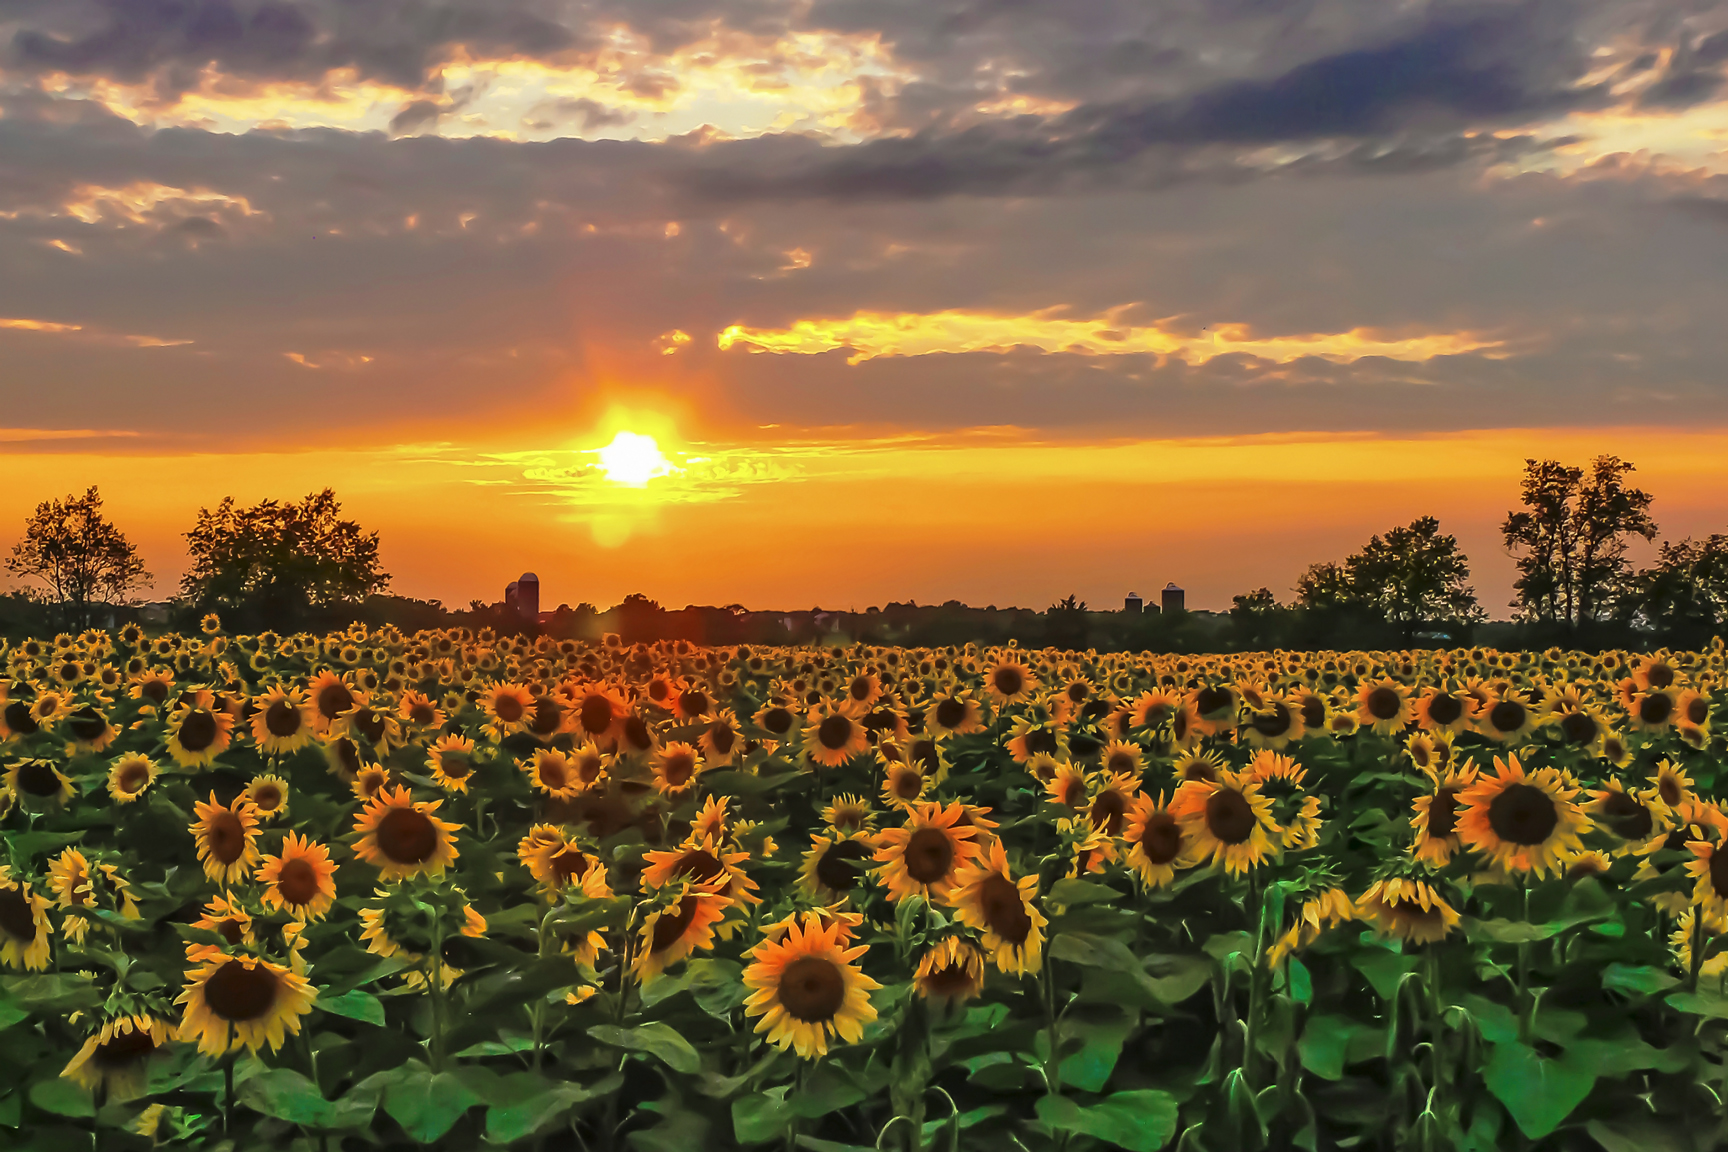 SunflowerSunset EarthShare New Jersey